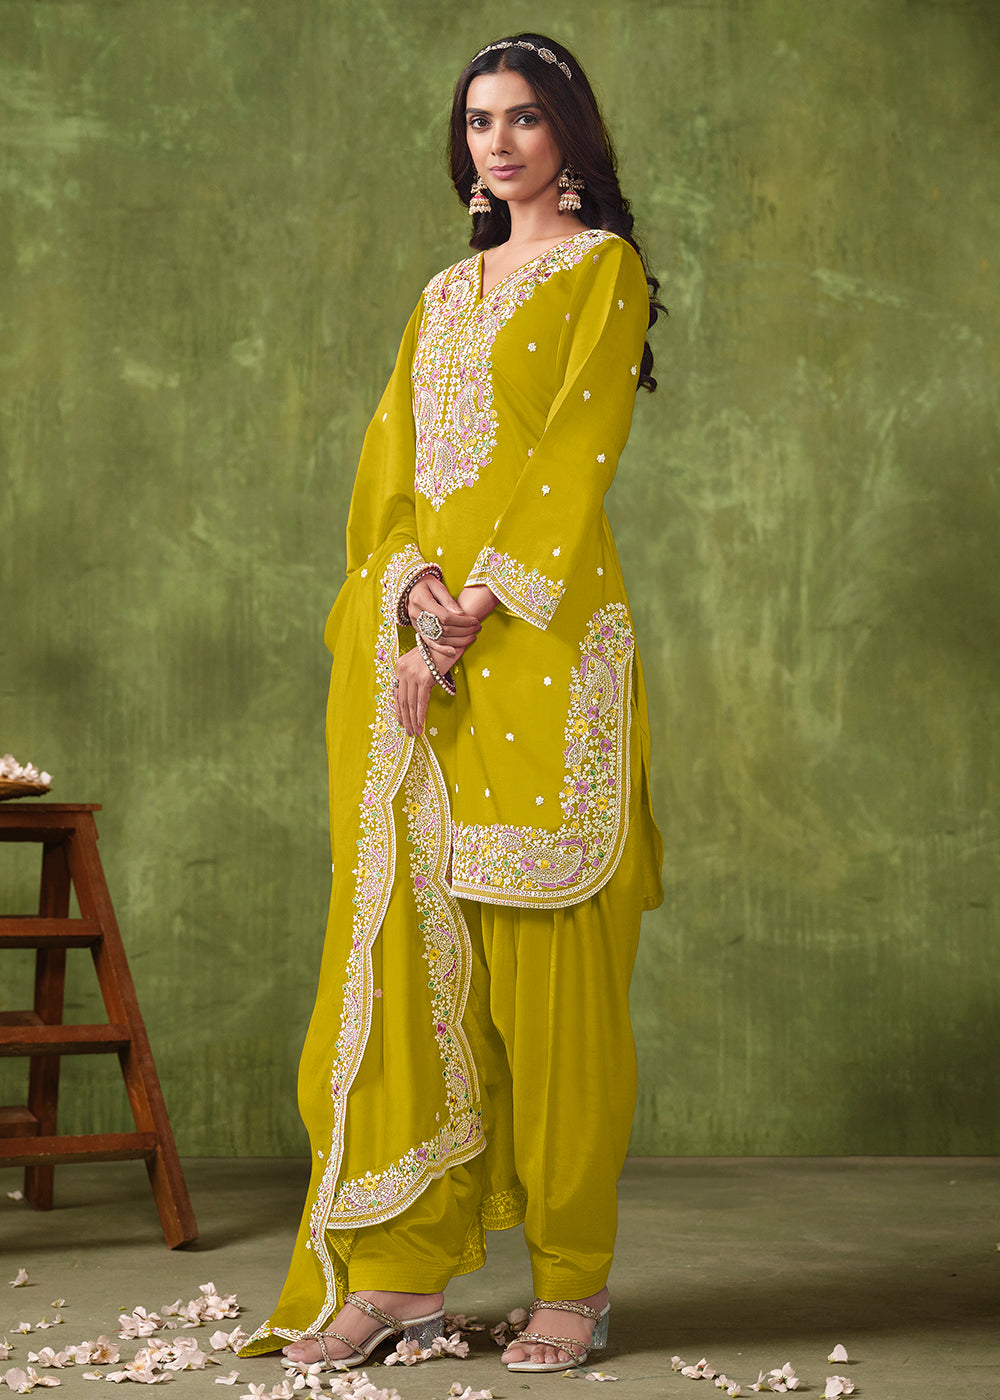 Buy Now Patiala Style Green Chanderi Silk Punjabi Salwar Suit Online in USA, UK, Canada, Germany, Australia & Worldwide at Empress Clothing. 